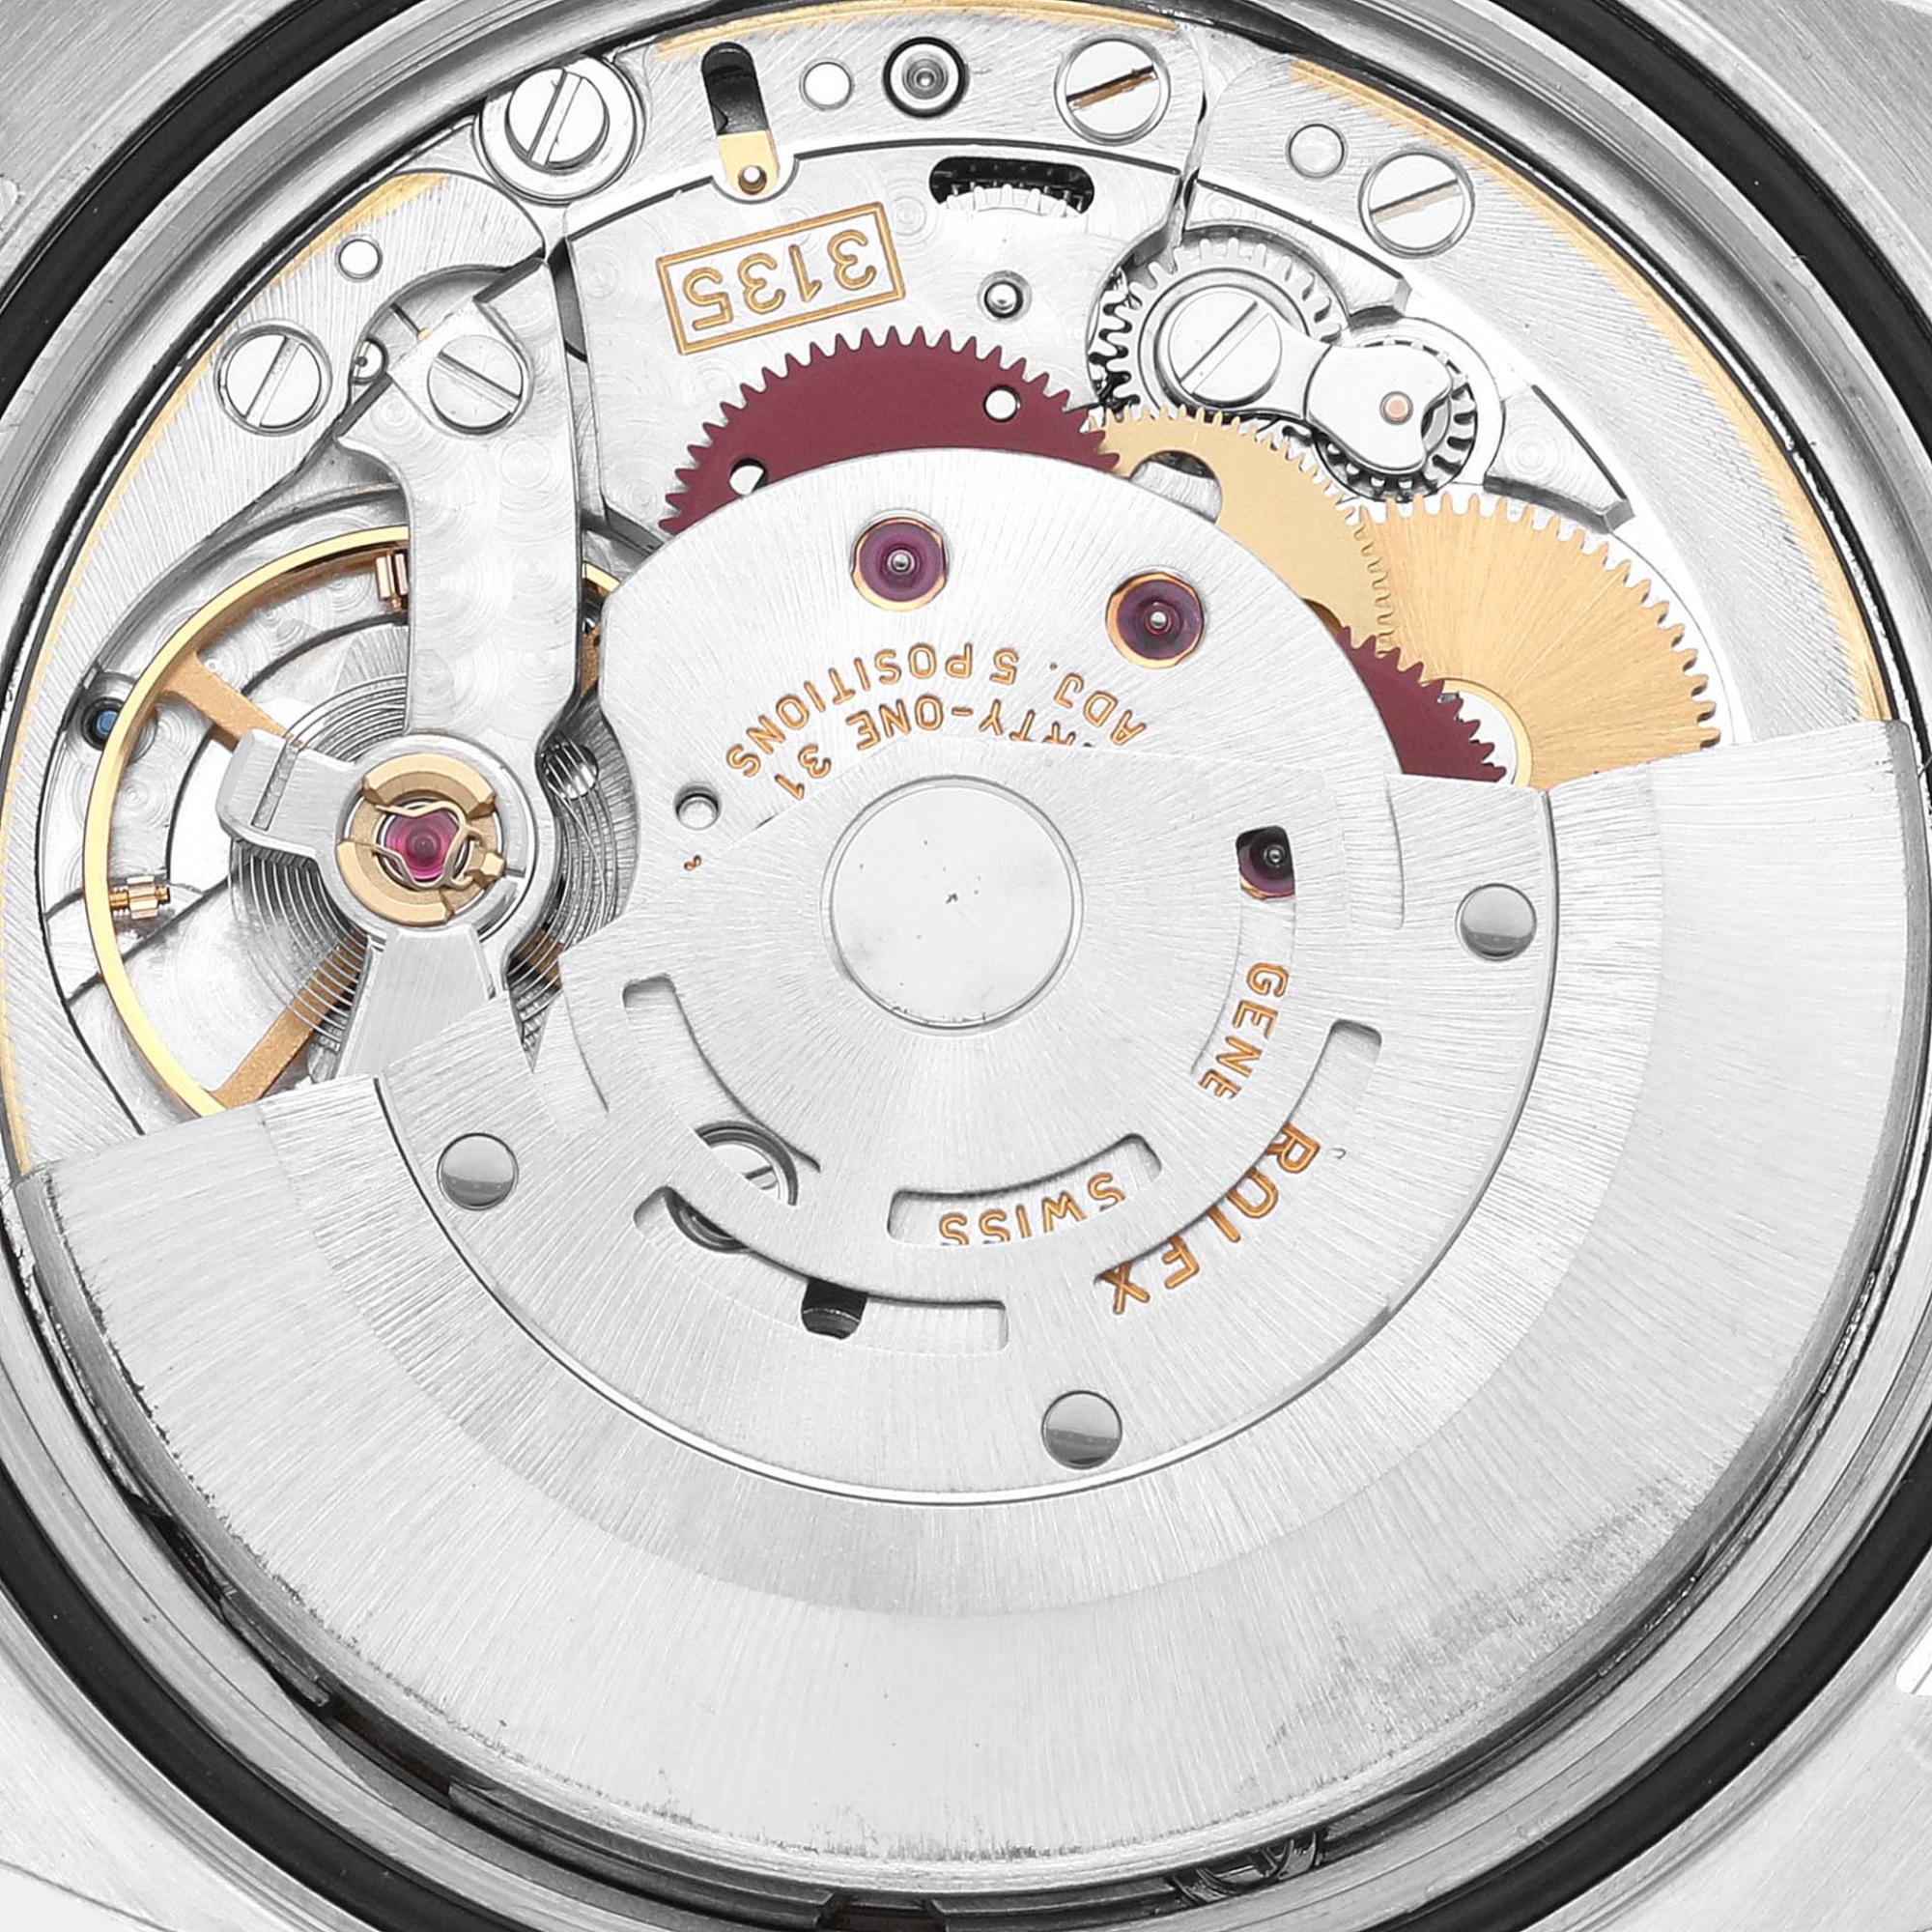 Rolex Datejust 36 Steel White Gold Salmon Roman Dial Men's Watch 16234 36 Mm